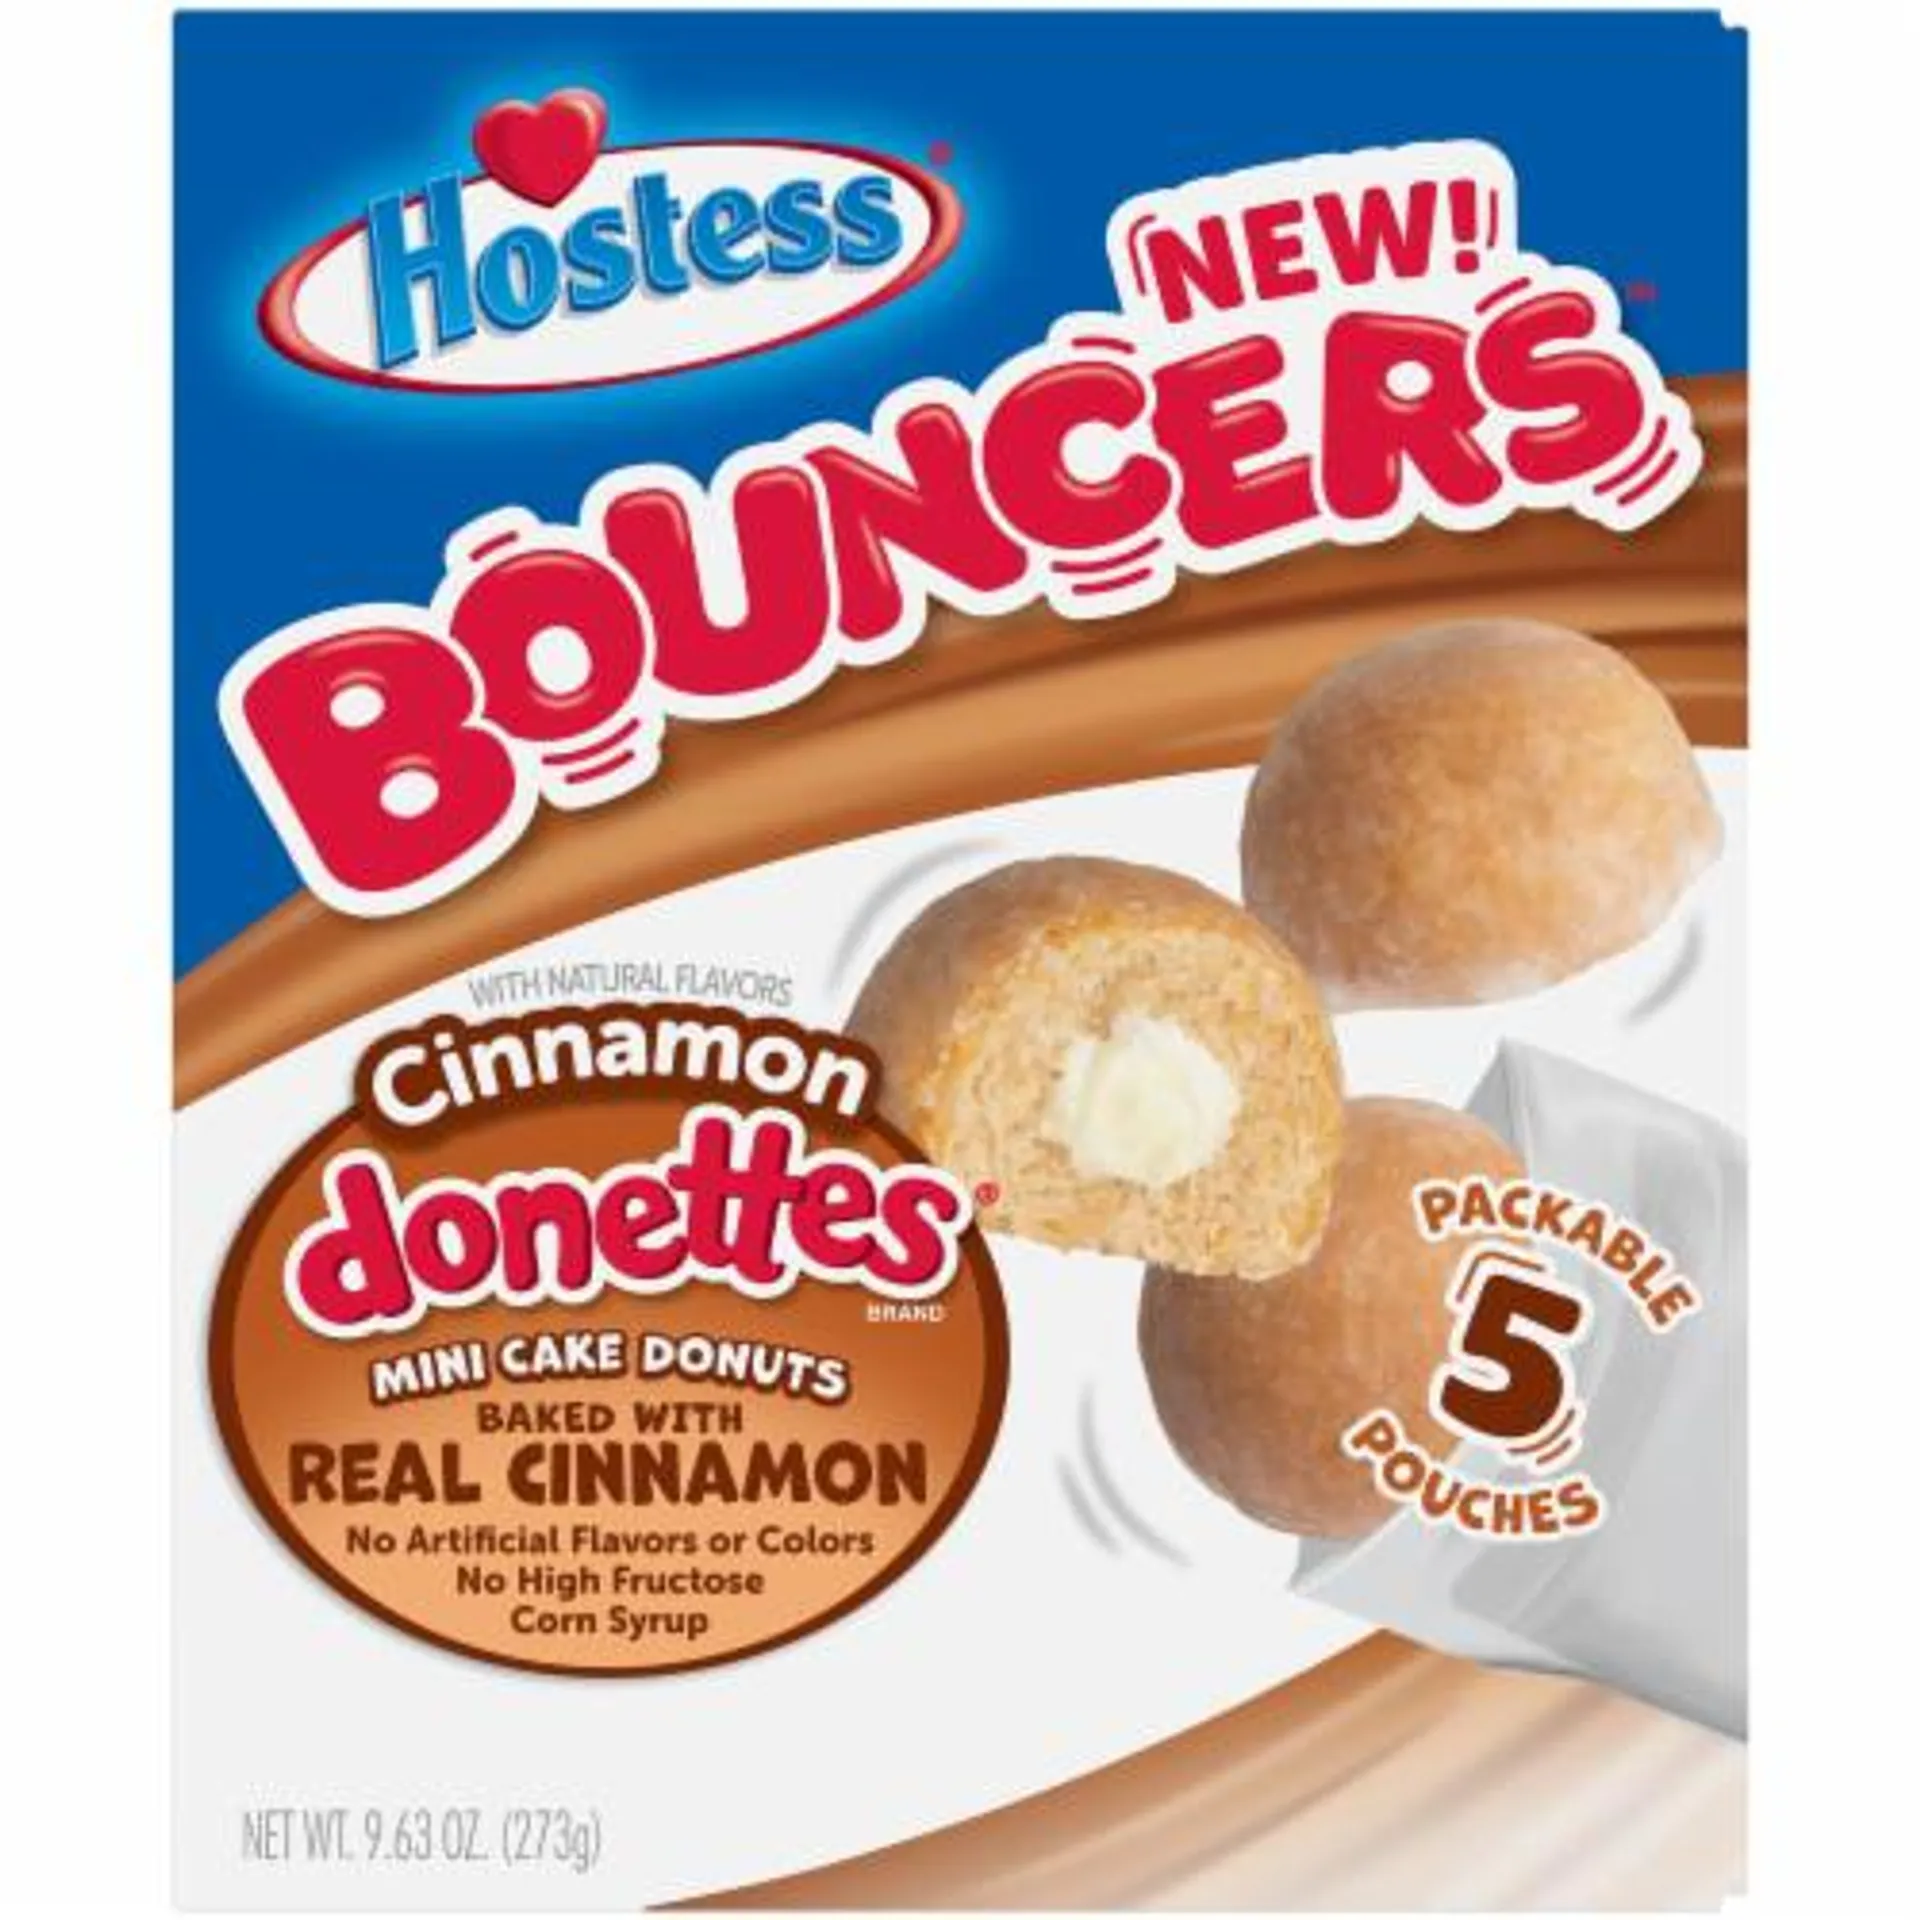 Hostess® Bouncers™ Cinnamon Donettes Mini Cake Donuts